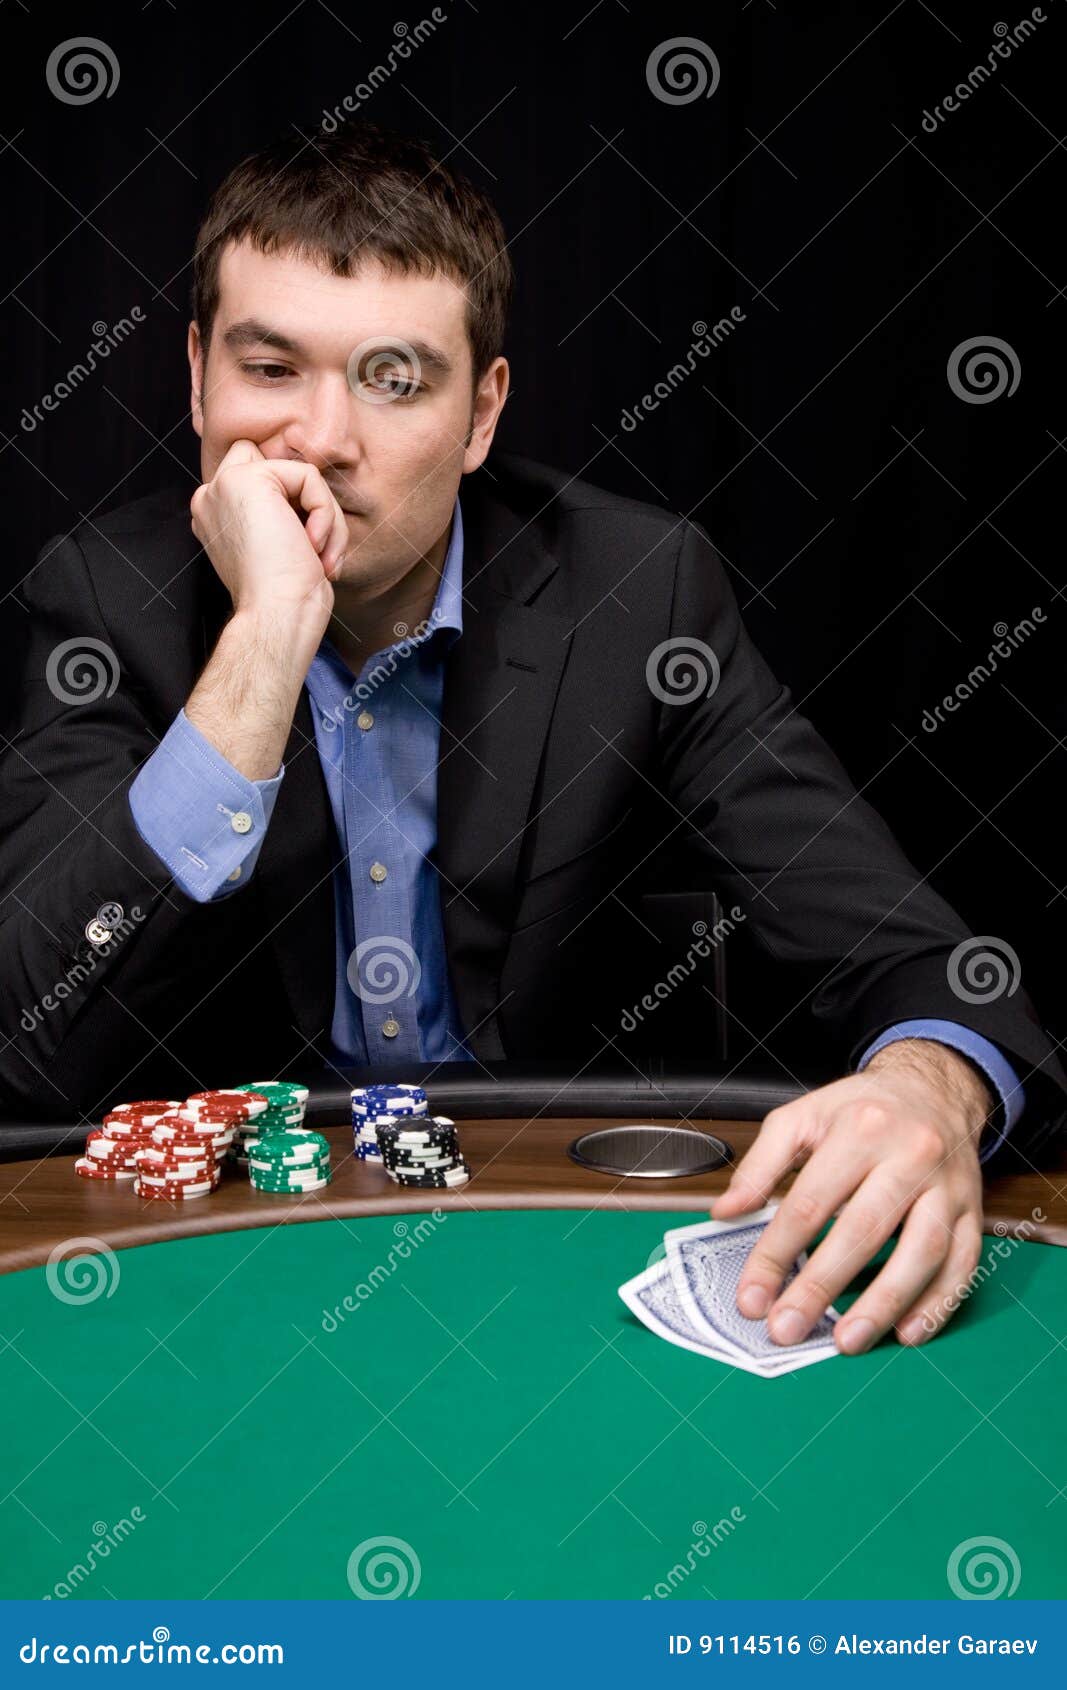 thinking before bet in casino